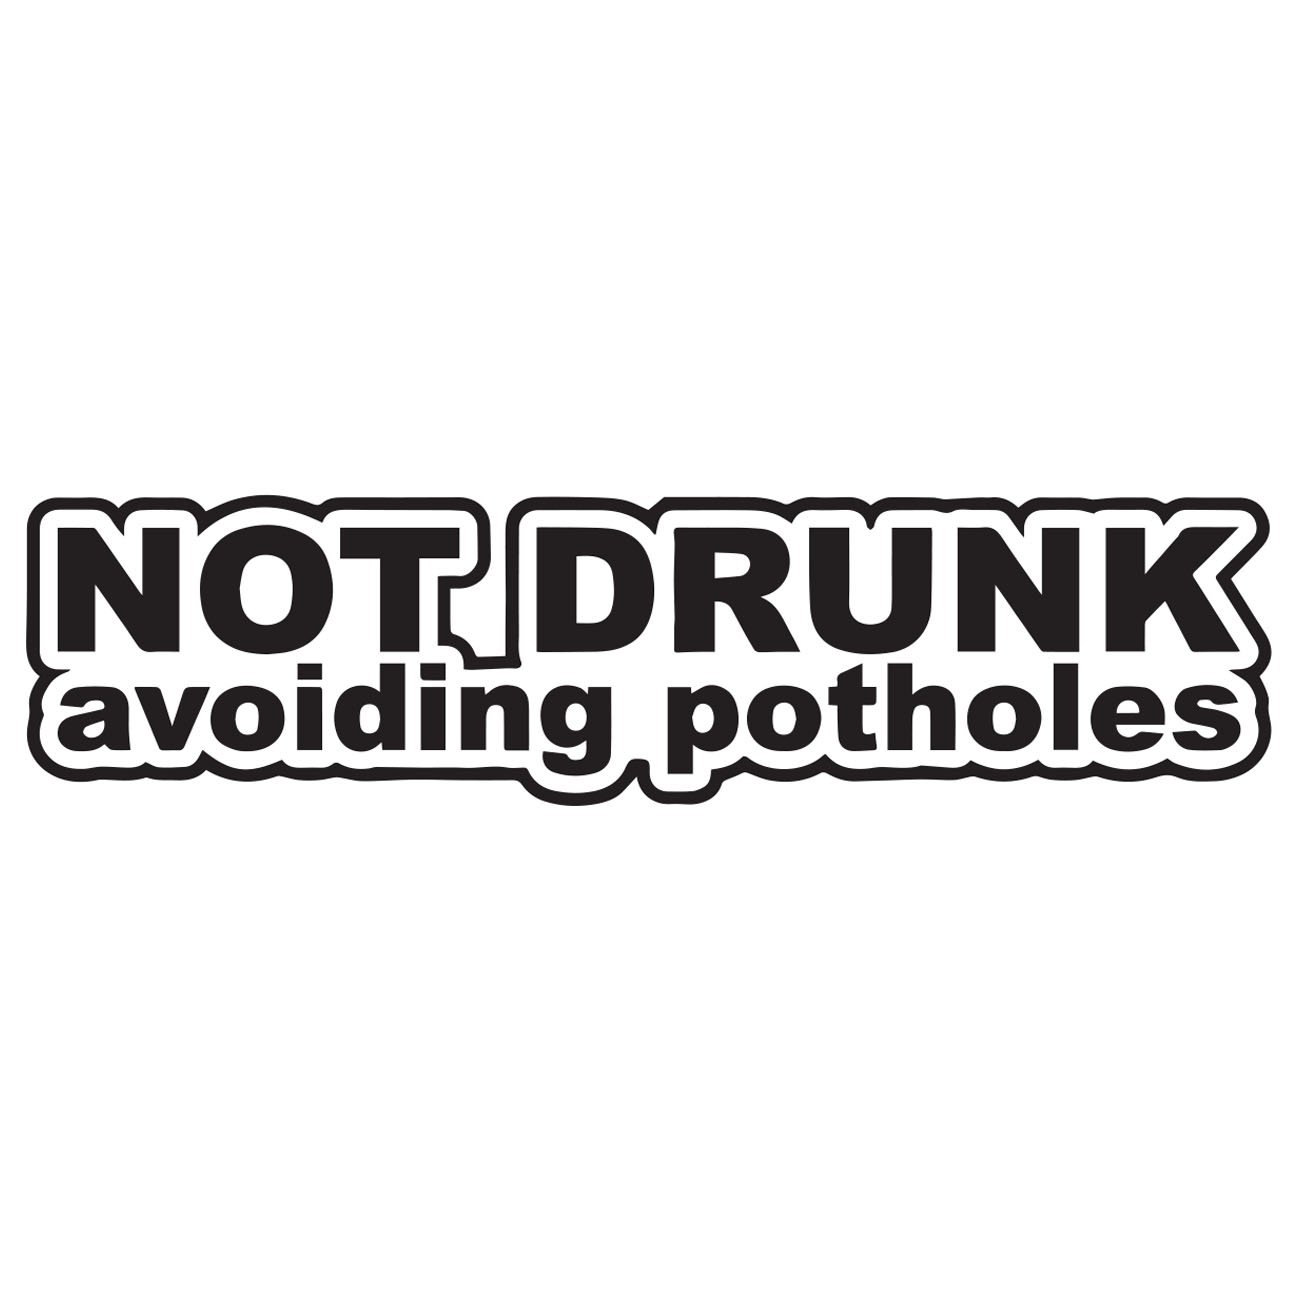 Not drunk - Avoiding potholes